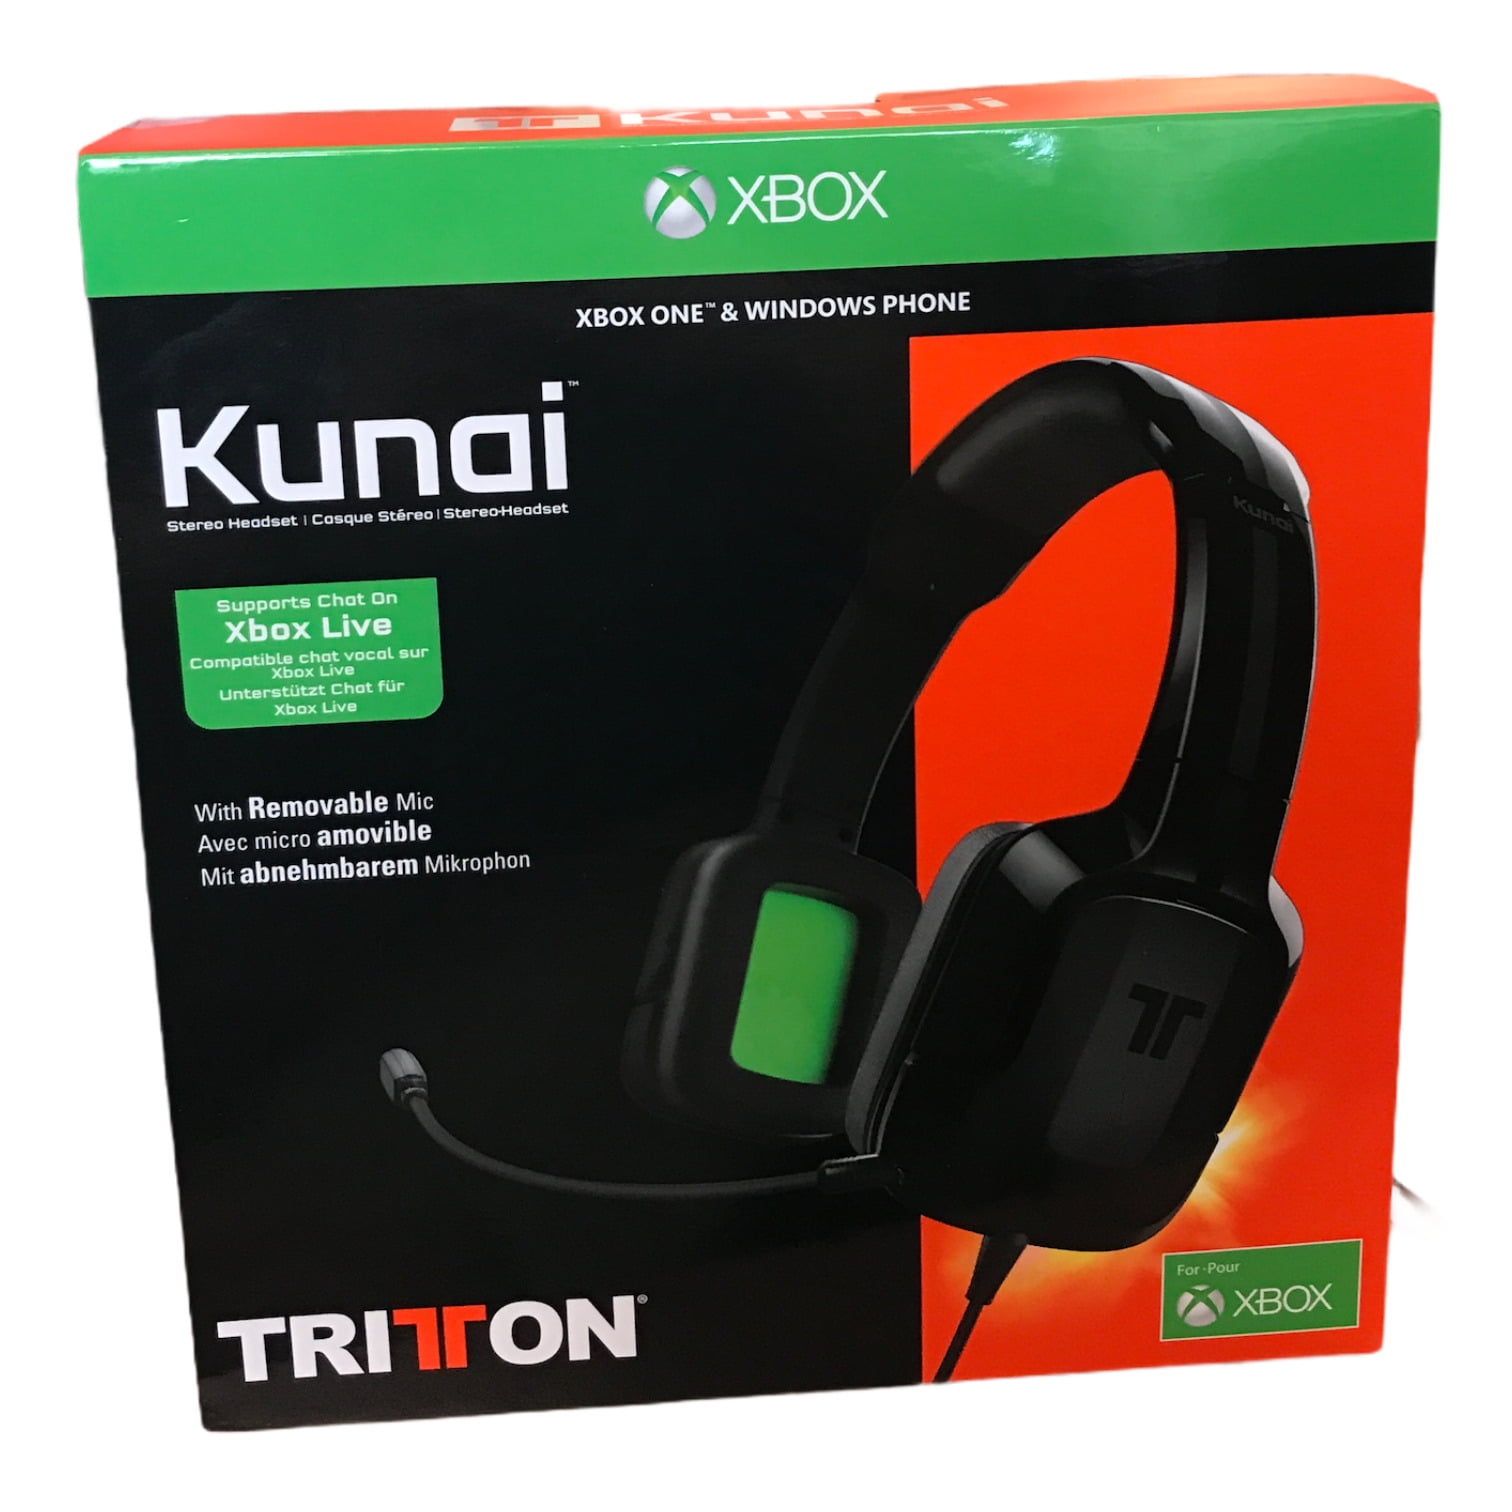 Burgerschap Gastheer van Australische persoon Gaming Headset for Xbox One by TRITTON Tri484030m02/02/1 Kunai 3.5mm Stereo  - Walmart.com